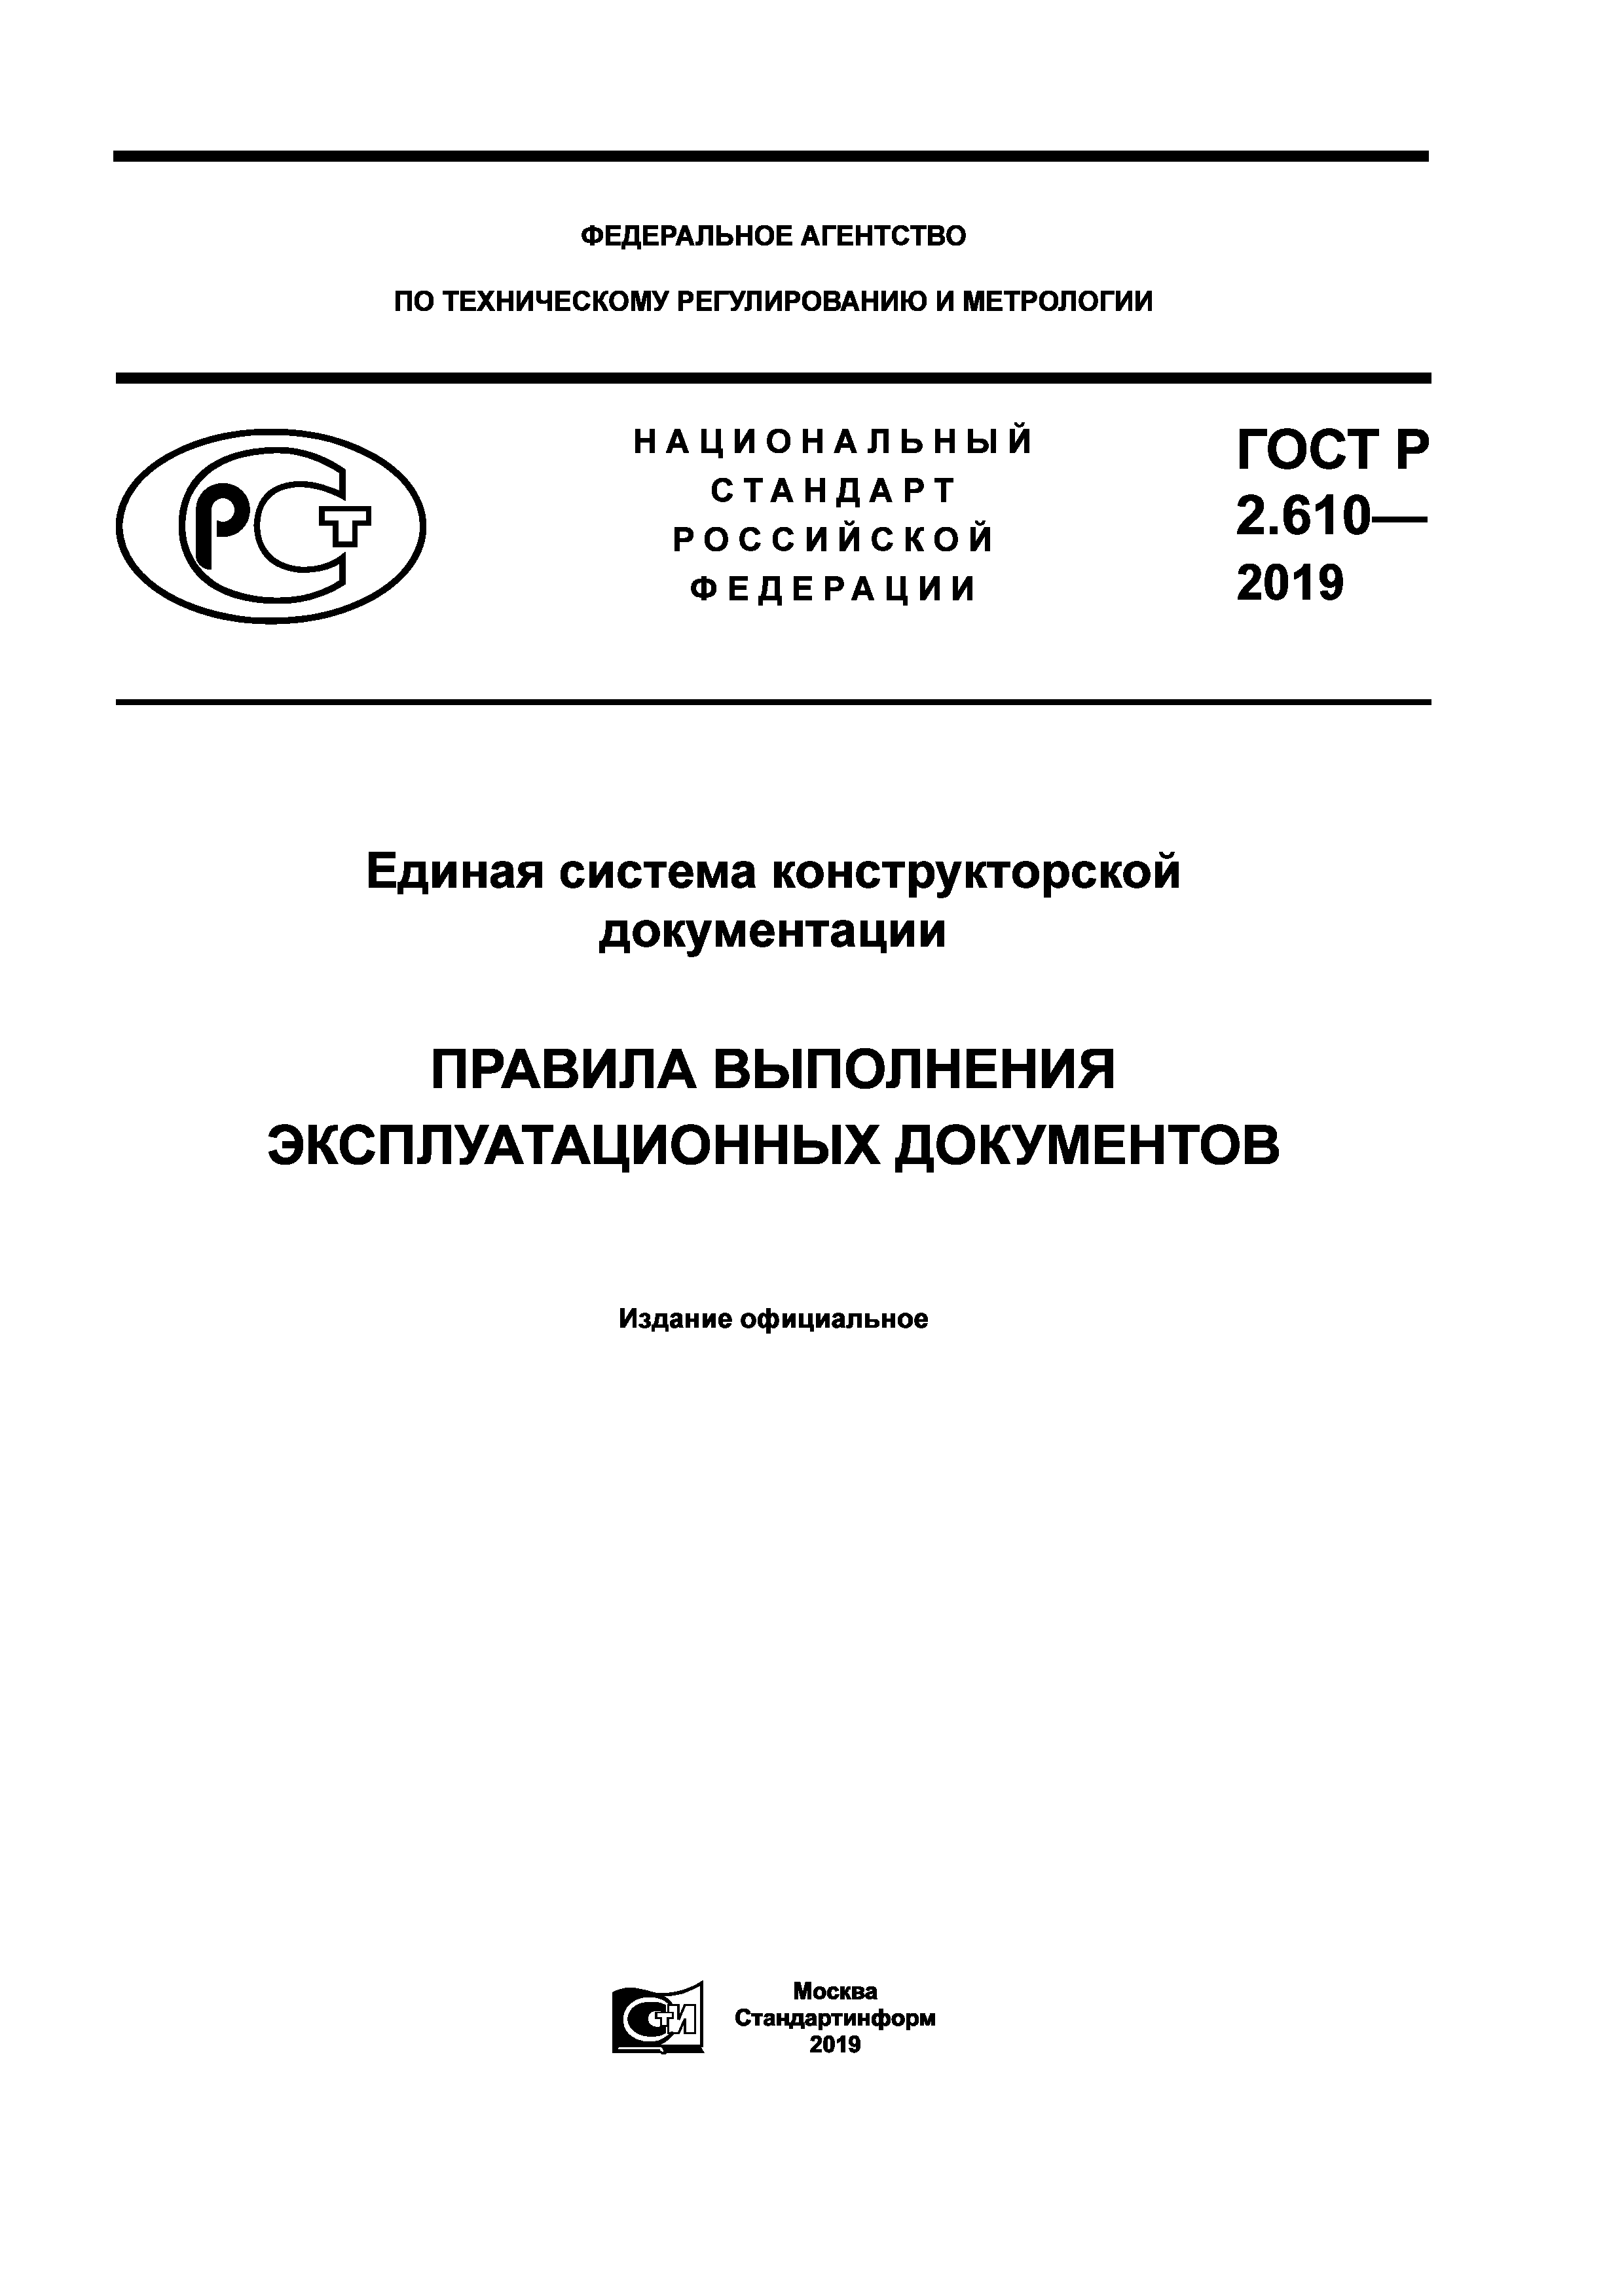 ГОСТ Р 2.610-2019